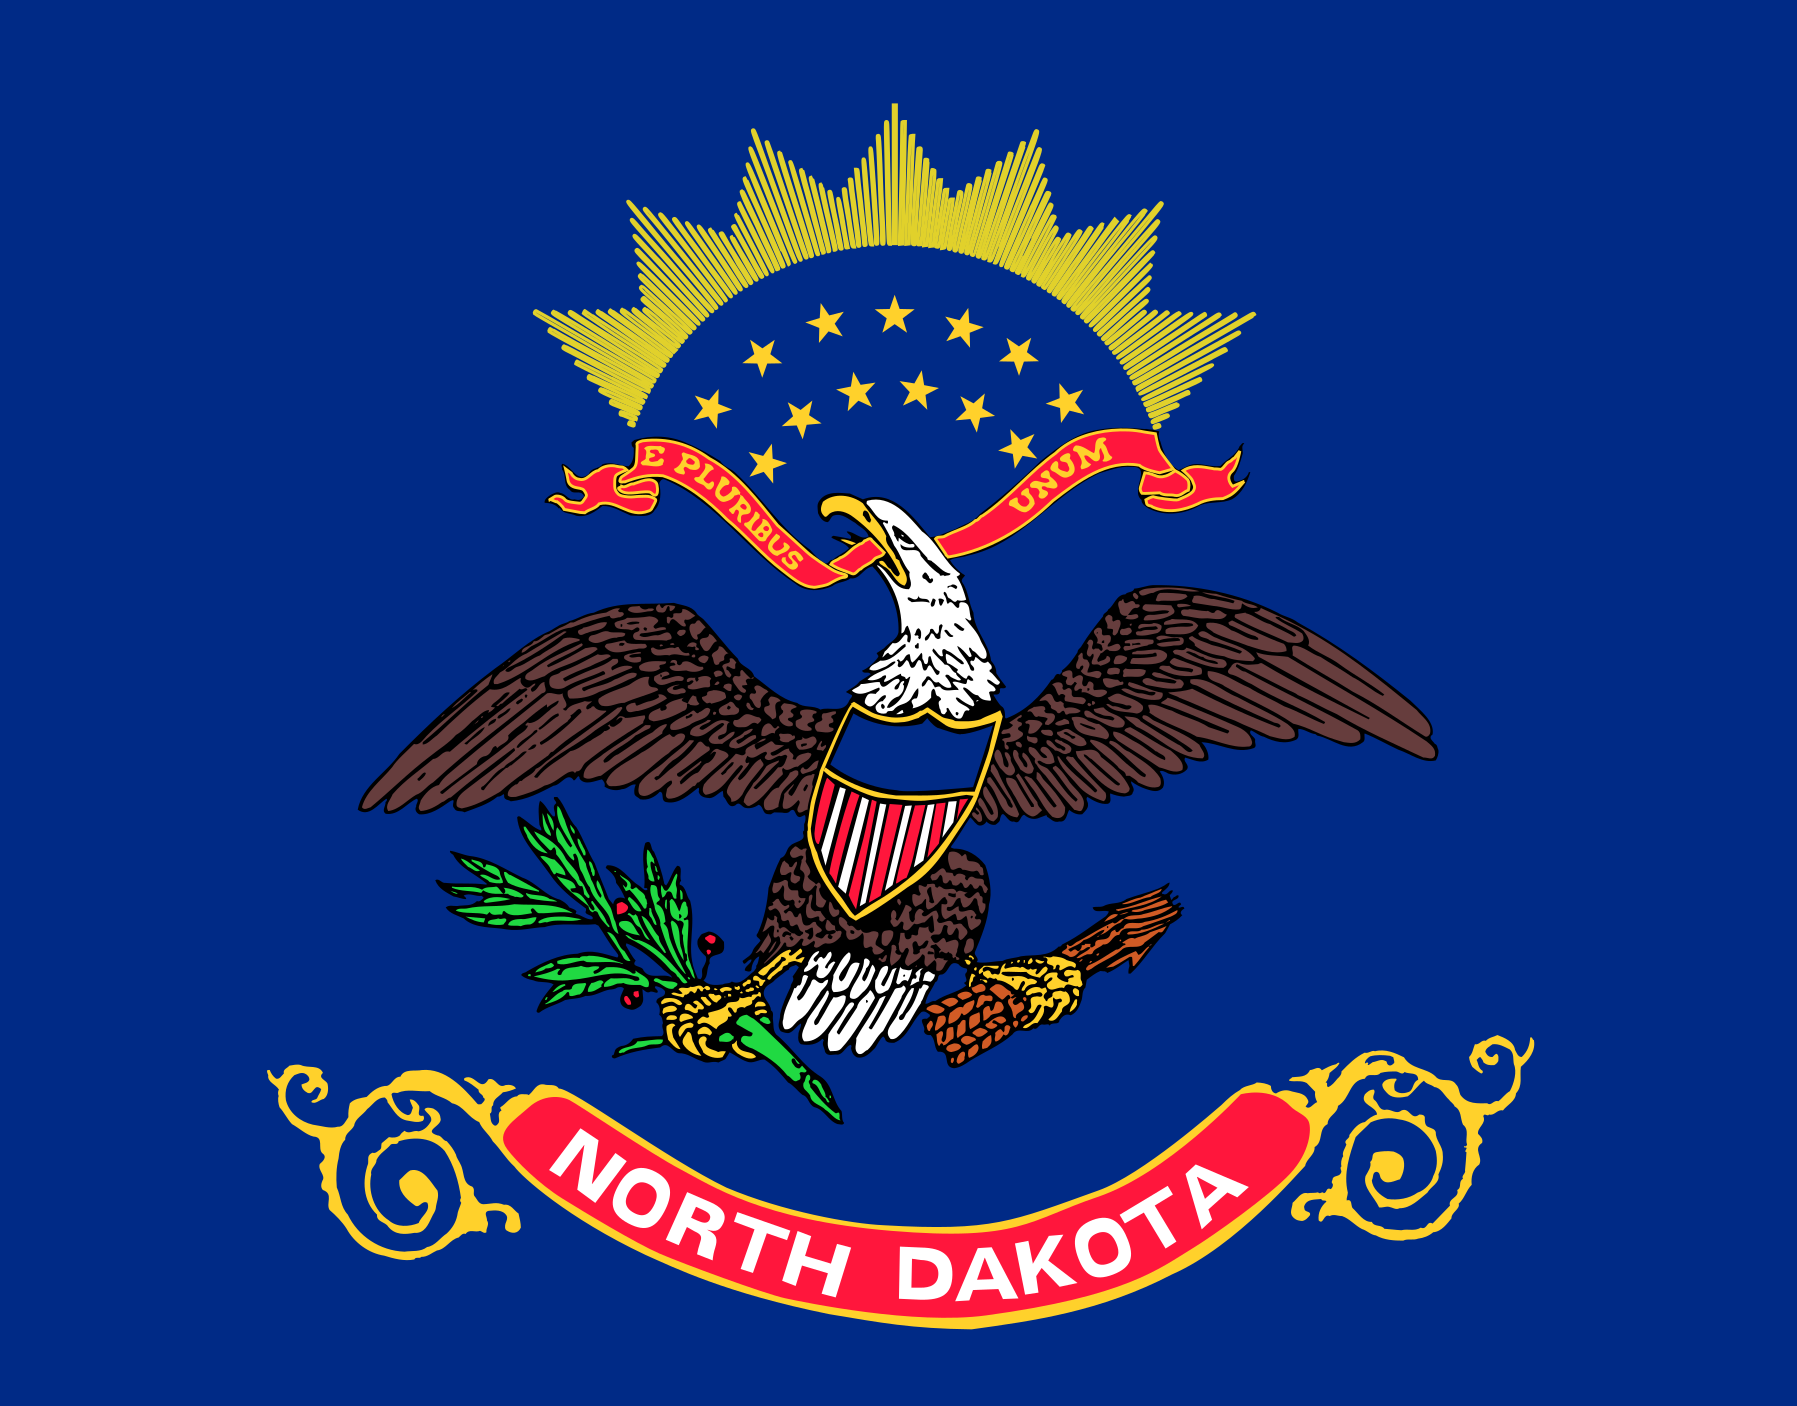 Free North Dakota Flag Images: AI, EPS, GIF, JPG, PDF, PNG, SVG and more!